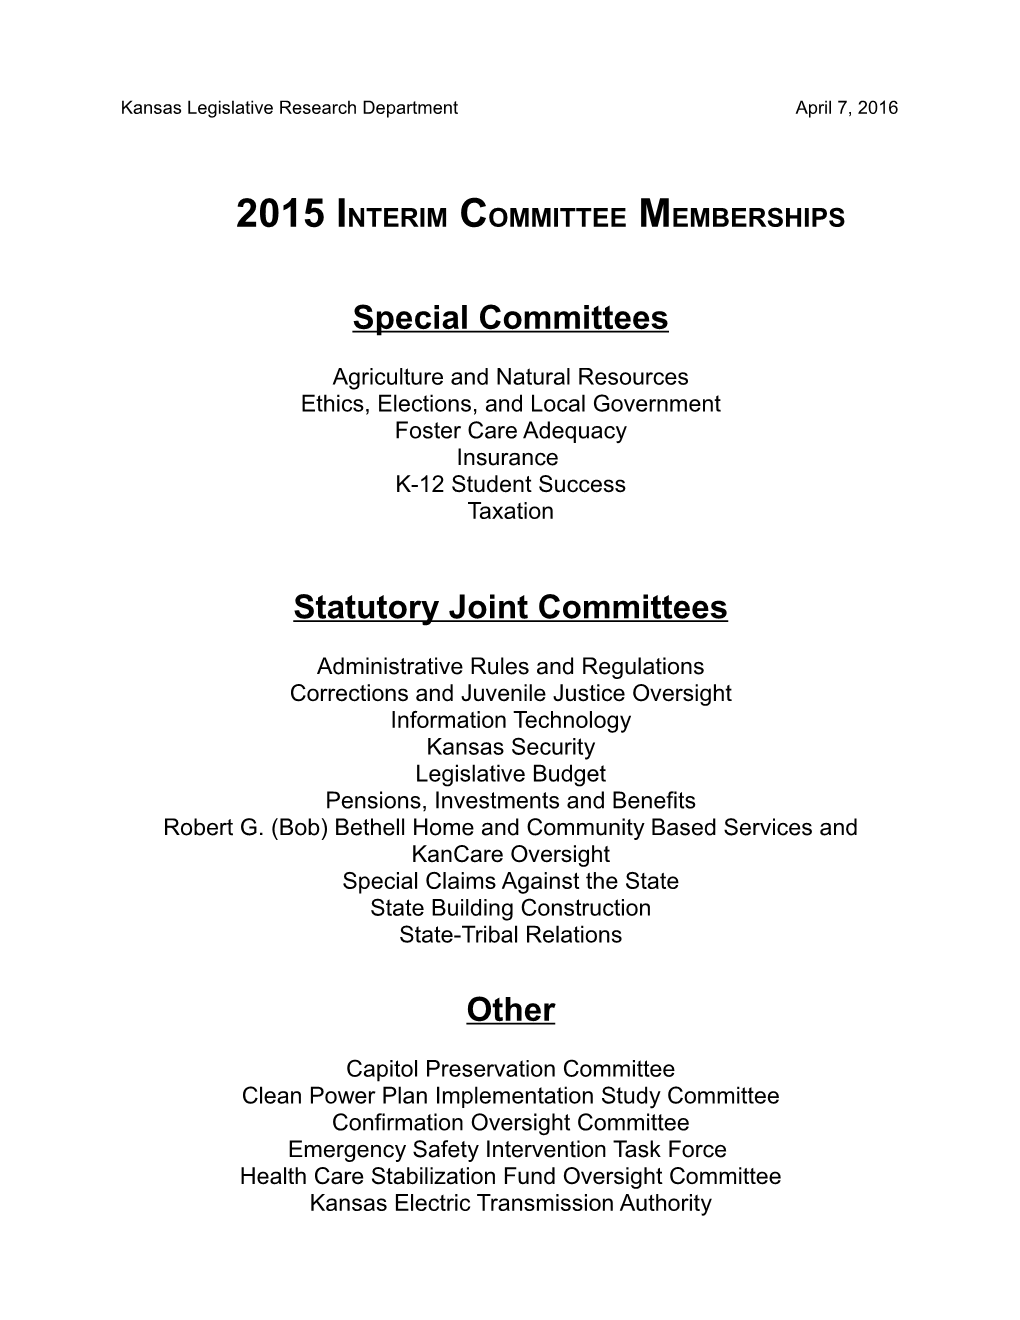 2015 Interim Committee Membership Listing